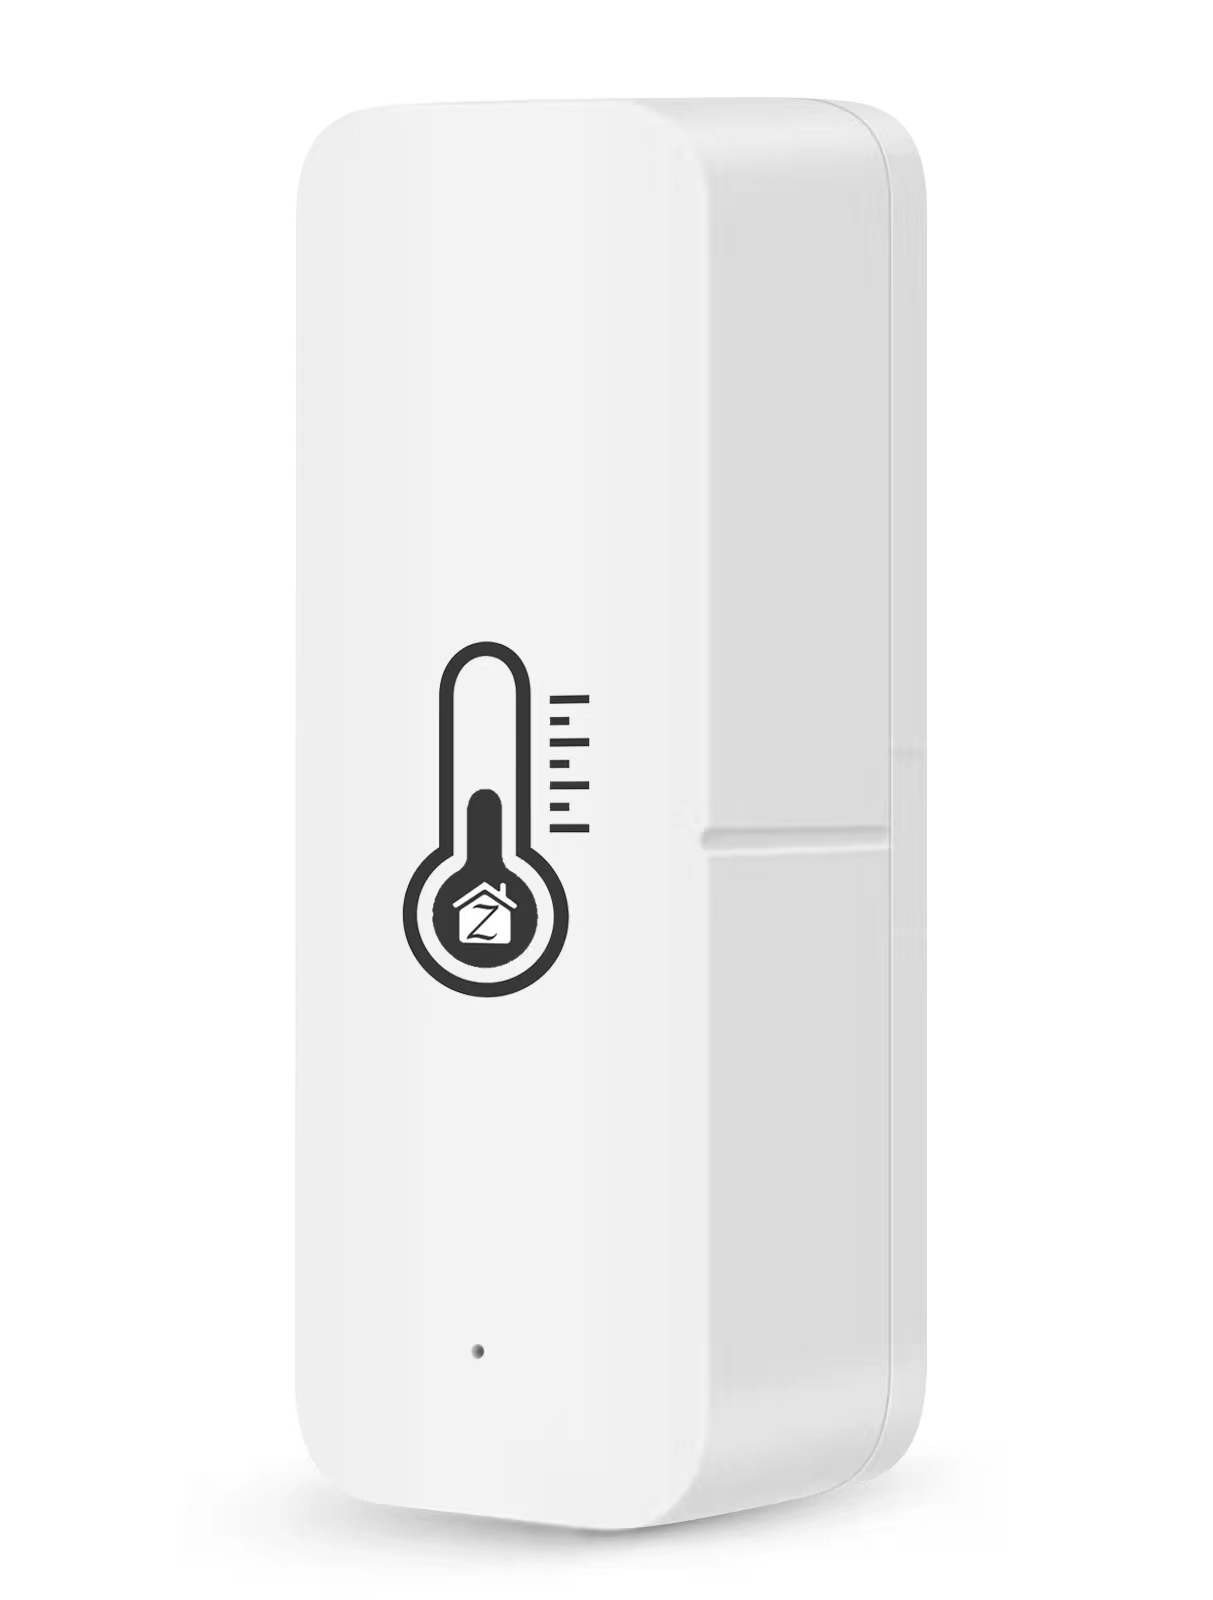 Tuya WIFI Zigbee Temperature and Humidity Sensor Indoor Hygrometer Controller Smart Home APP Monitoring For Alexa Google Home